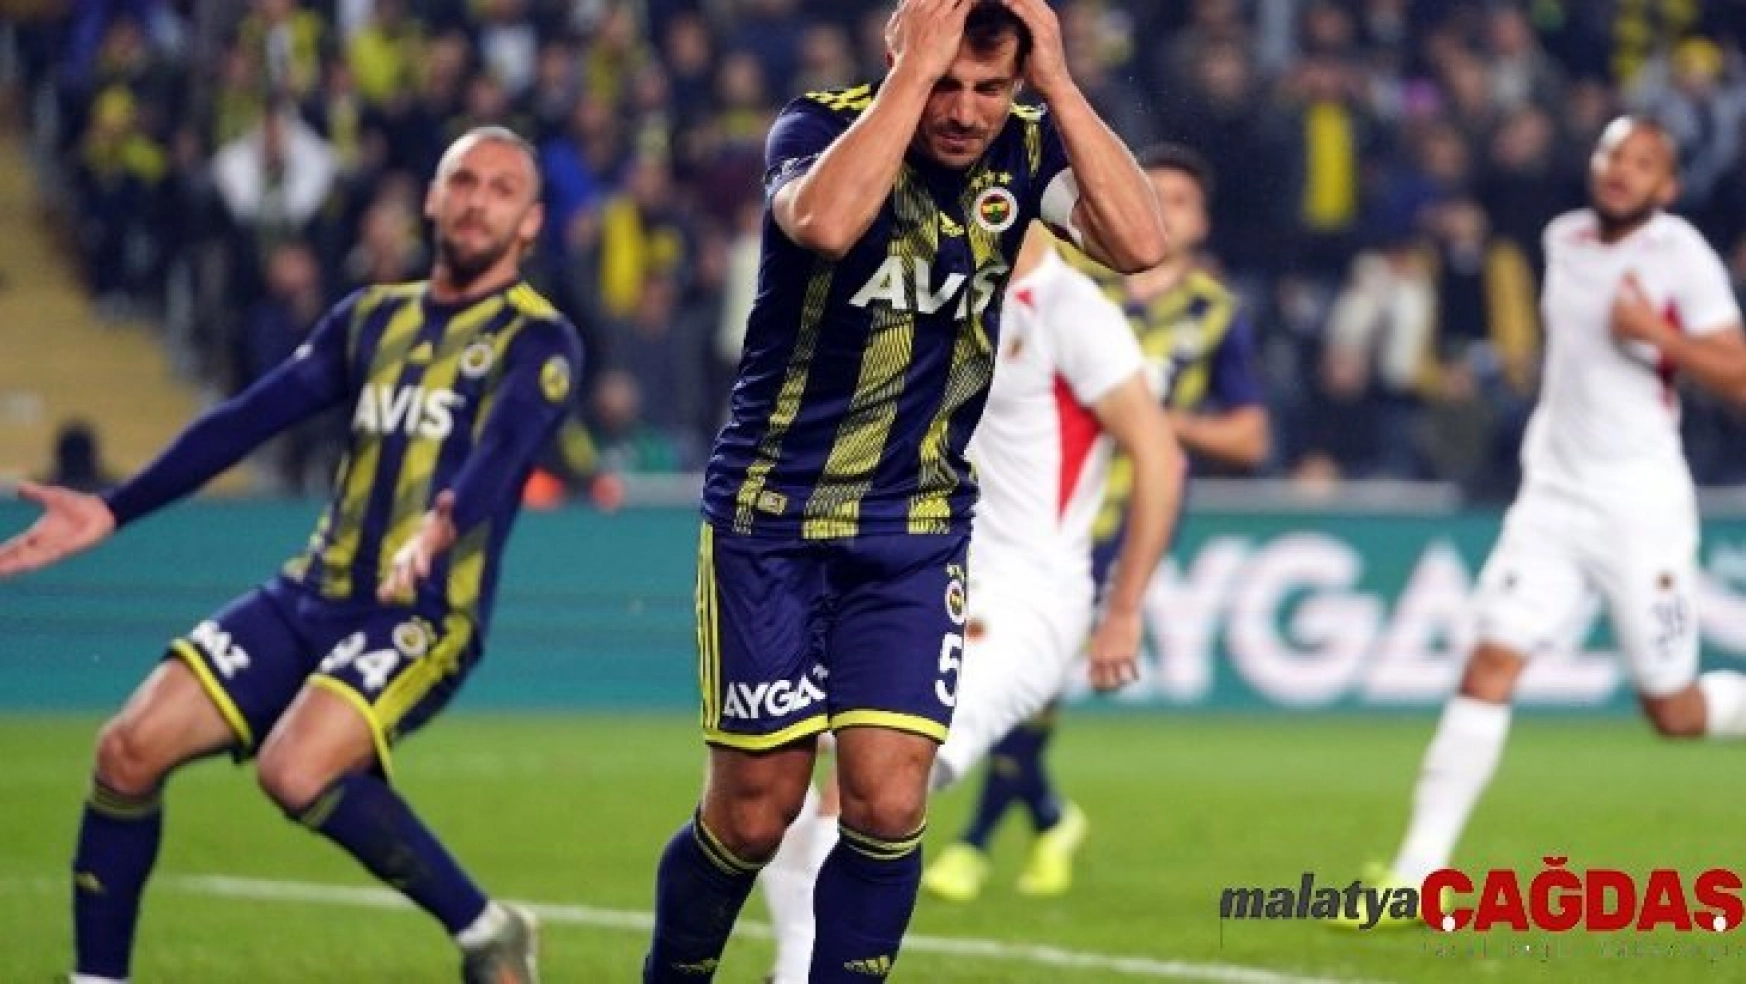 Süper Lig: Fenerbahçe: 5 - Gençlerbirliği: 2 (Maç sonucu)